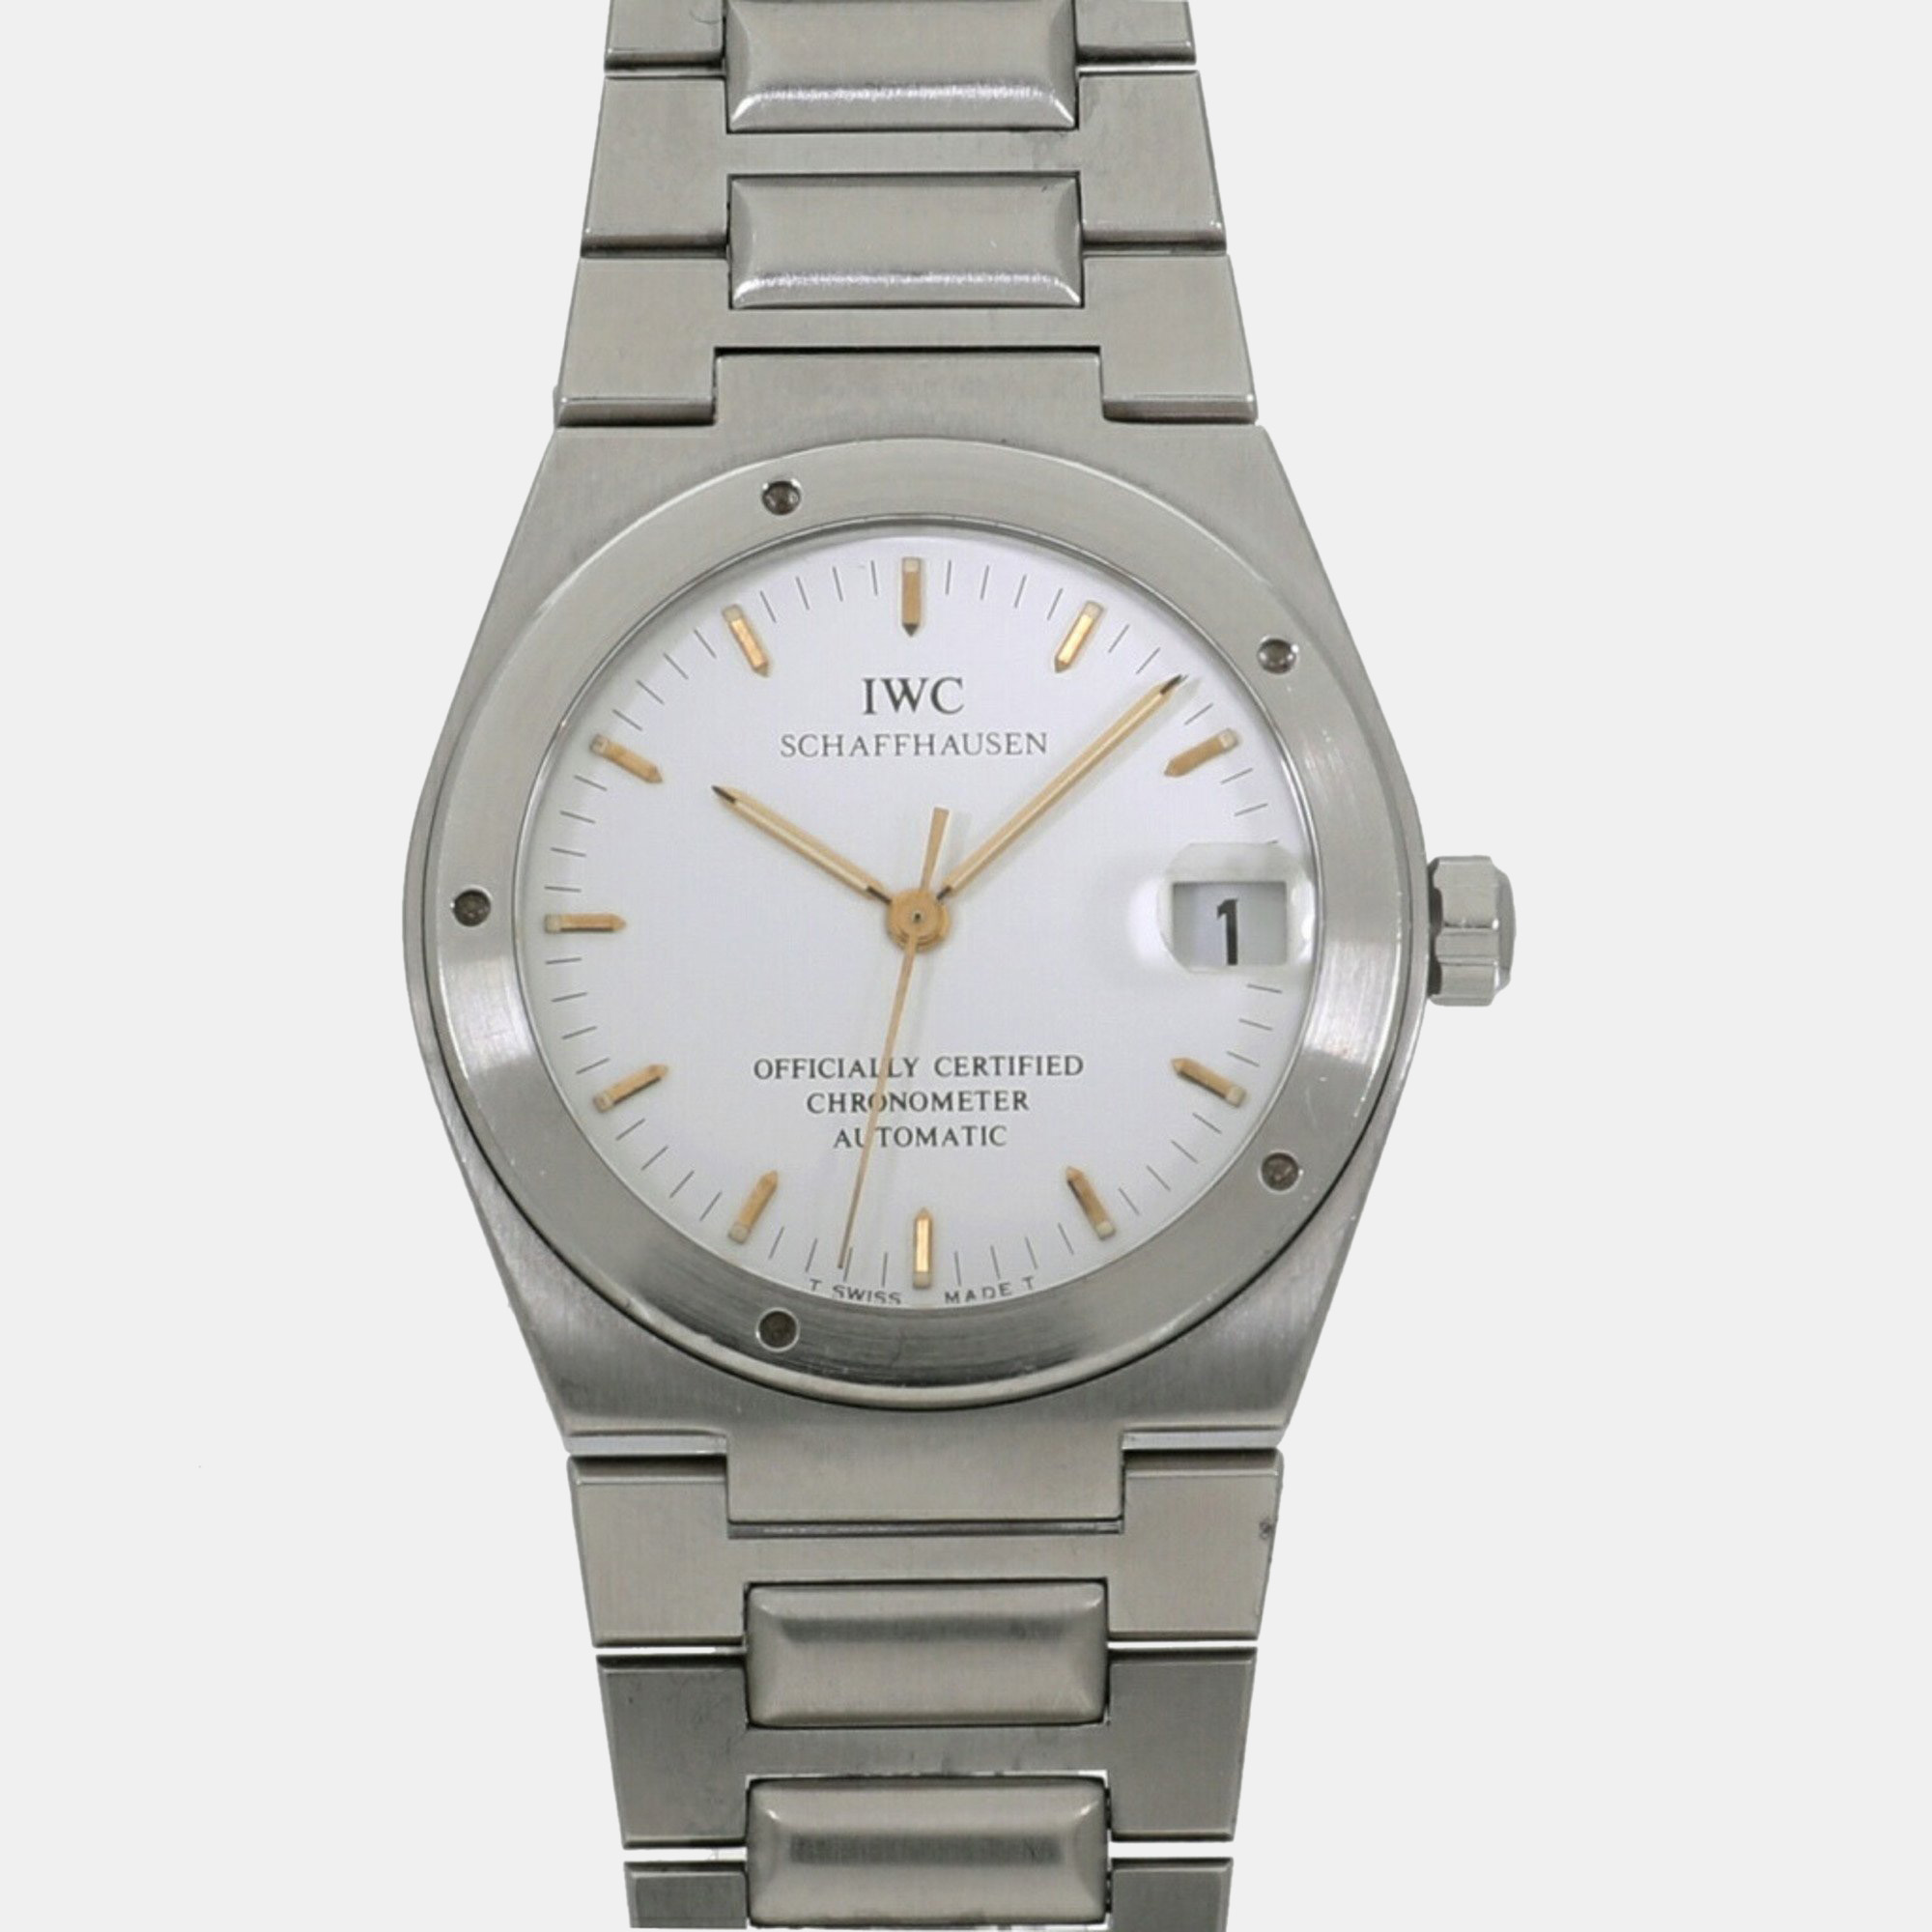 Iwc white stainless steel ingenieur iw352101 men's wristwatch 34mm